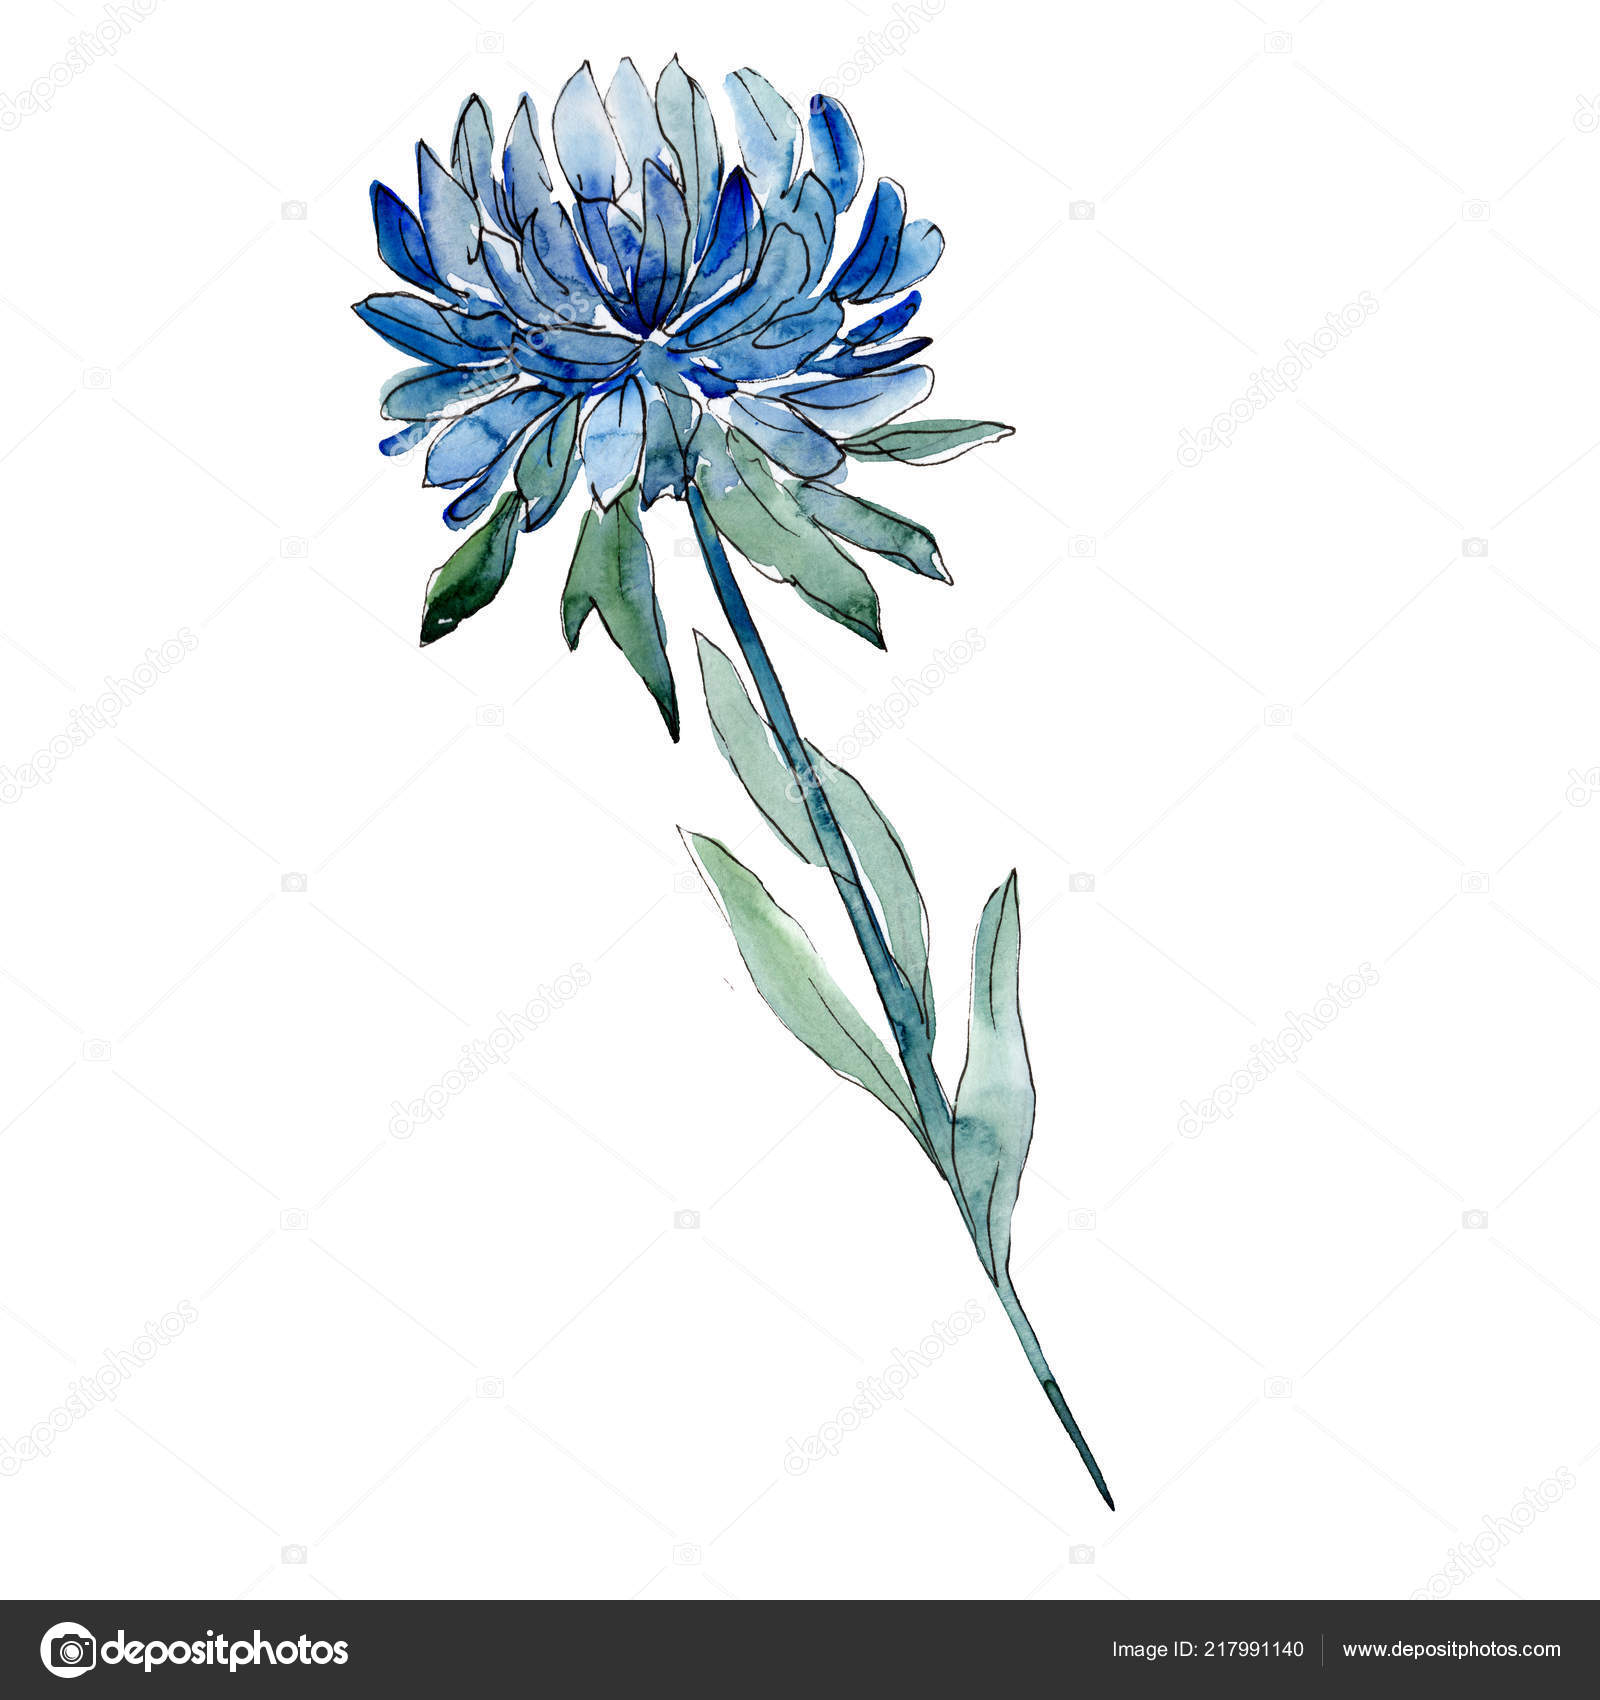 Watercolor Blue Aster Flower Floral Botanical Flower Isolated Illustration Element Stock Photo C Mystocks 217991140